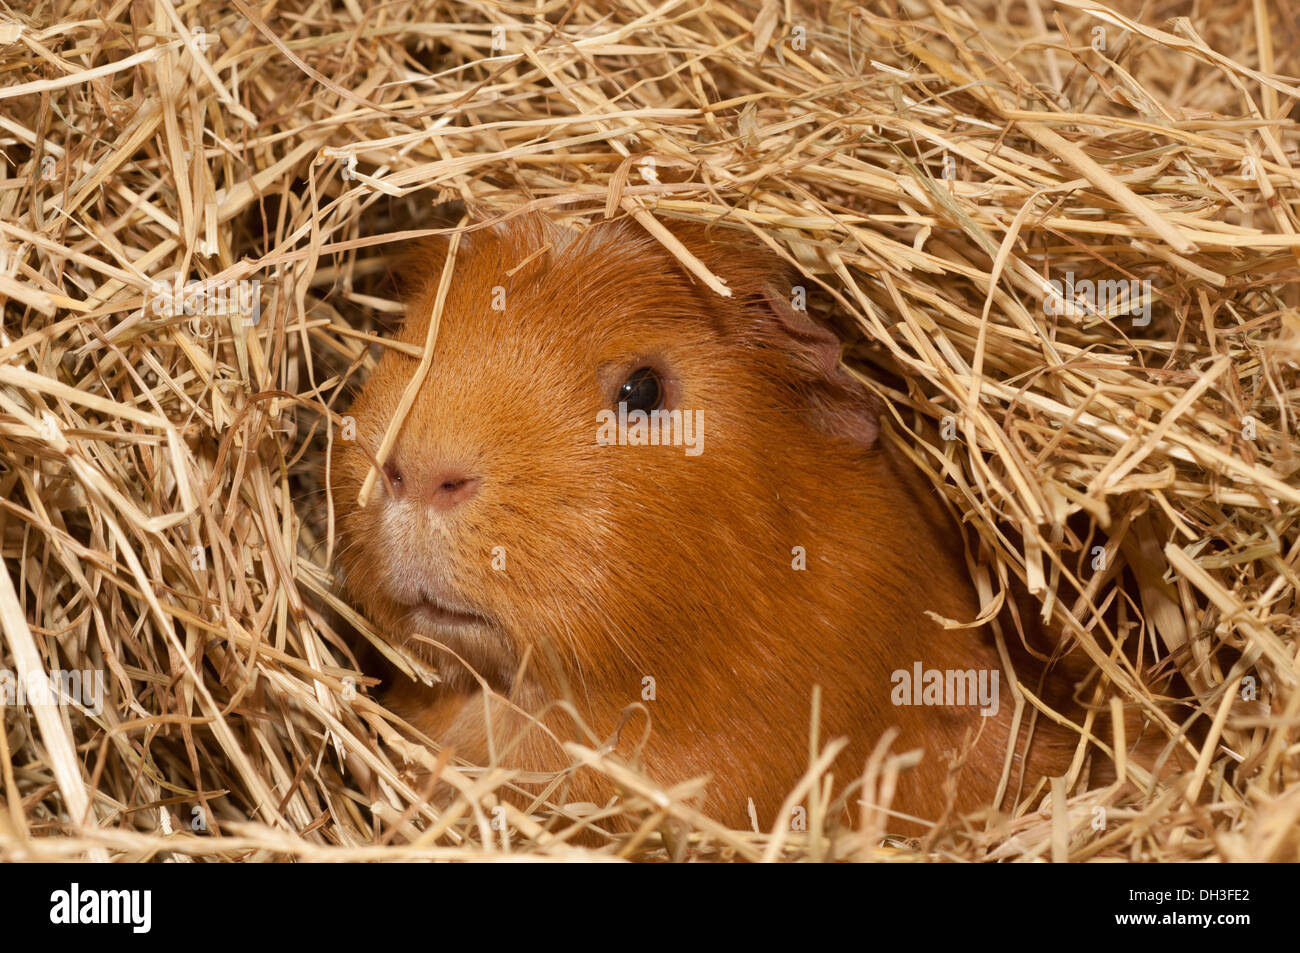 Pet Guinea pig in hay Stock Photo